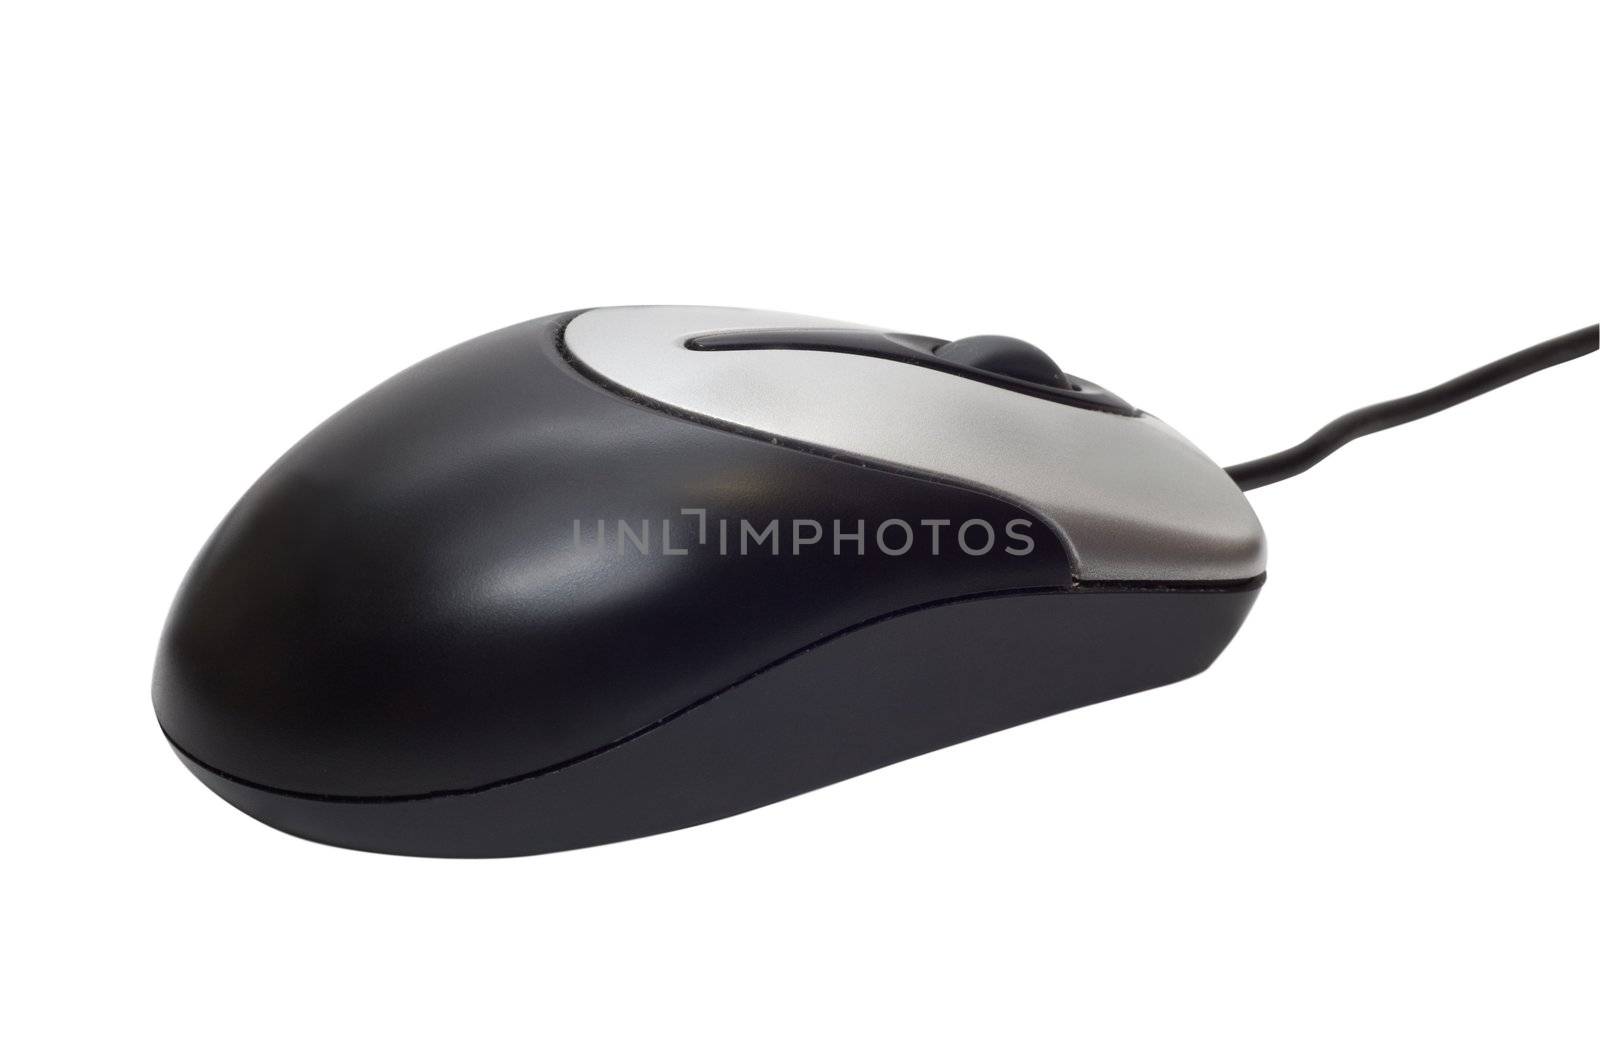 Pc grey optical mouse on white background